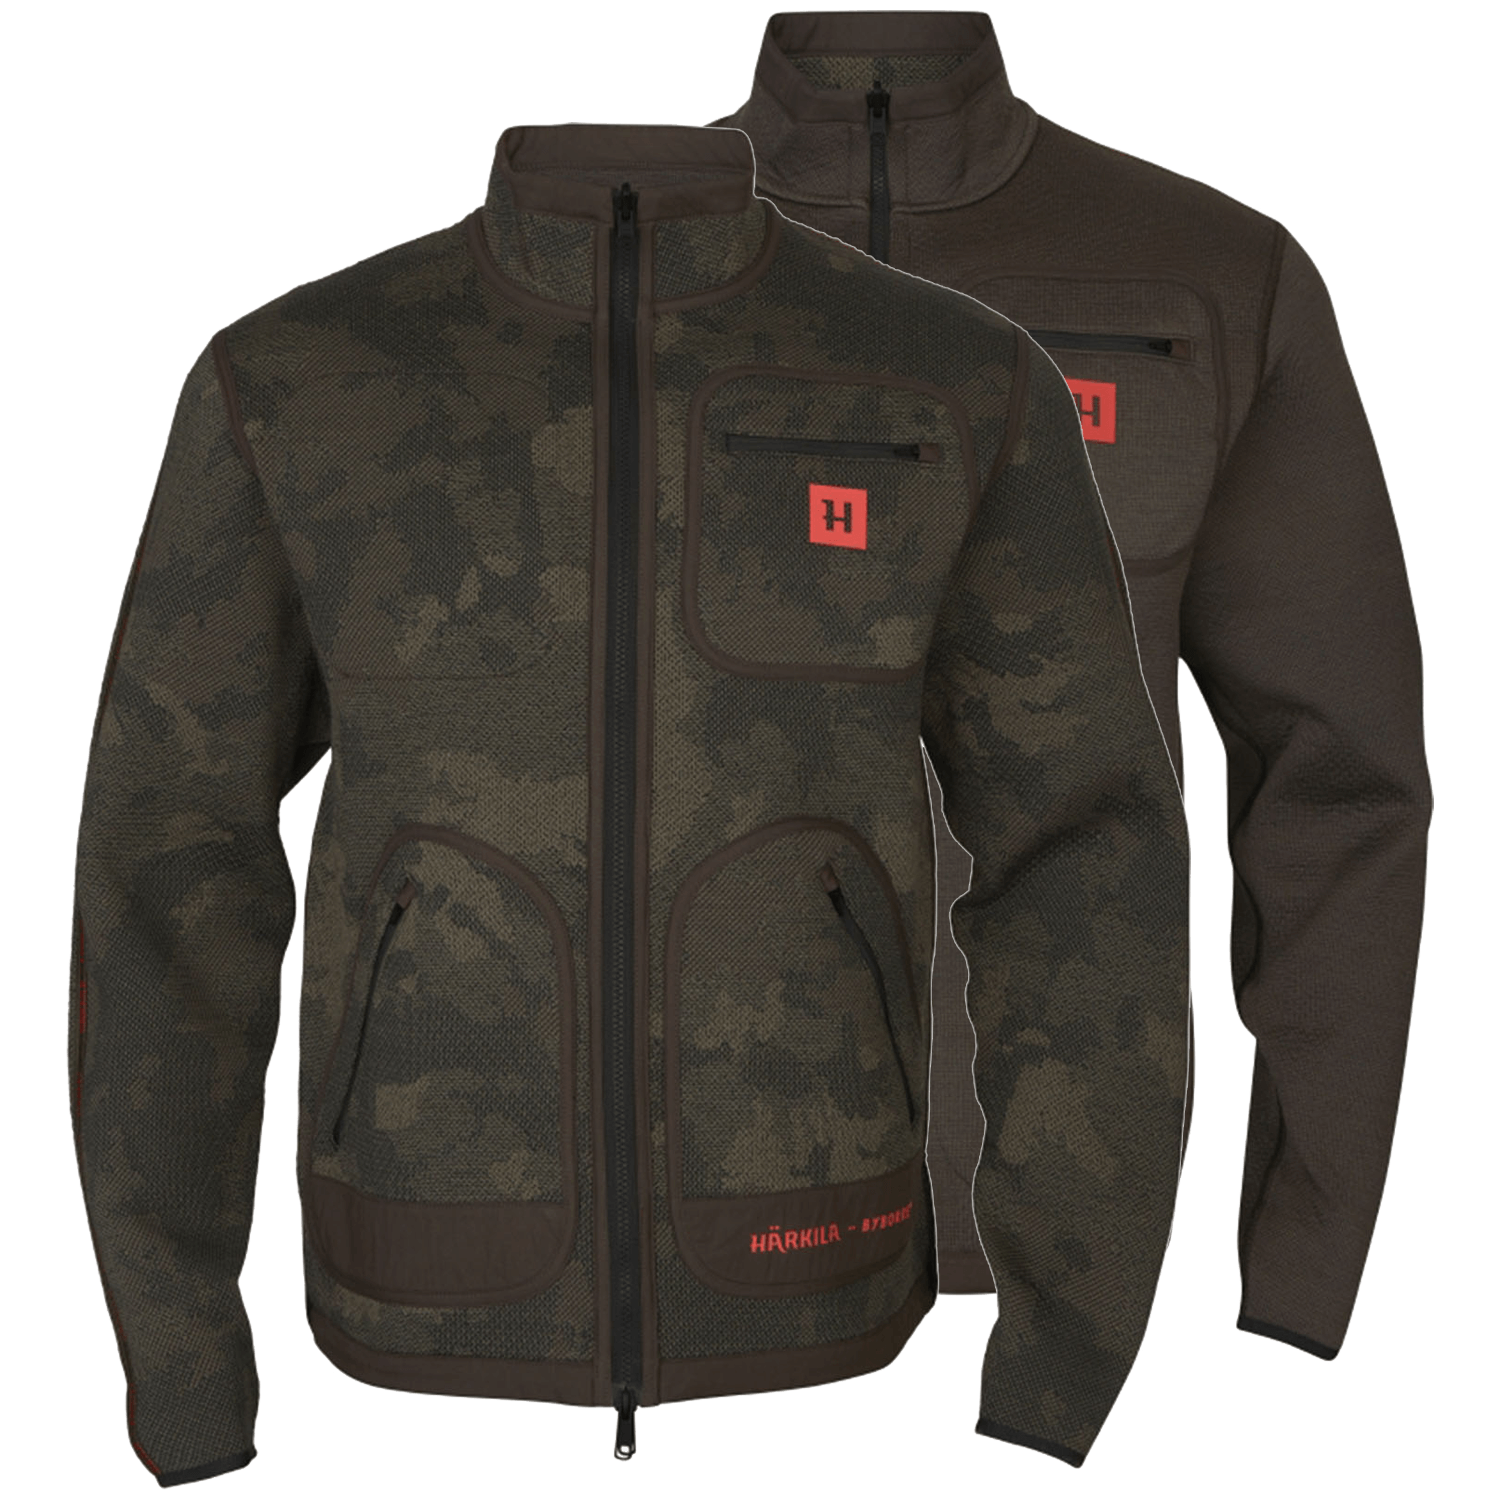 Härkila reversible jacket kamko pro edition (AXIS MSP ltd) - Hunting Jackets